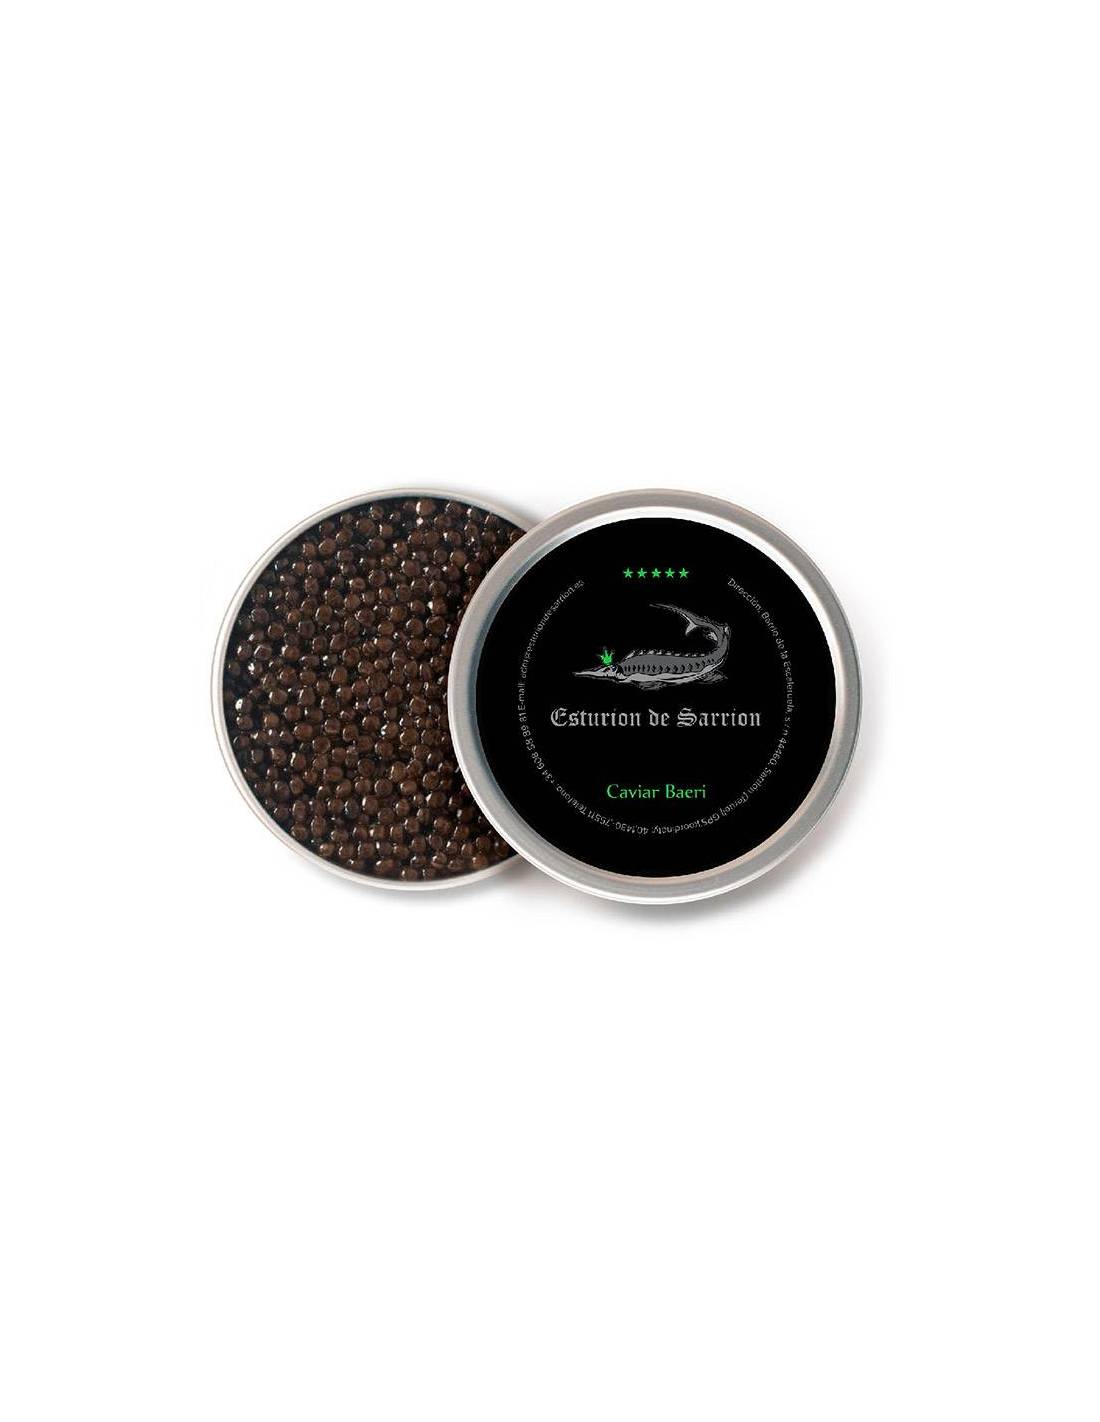 Can of Black Sturgeon Caviar 30g